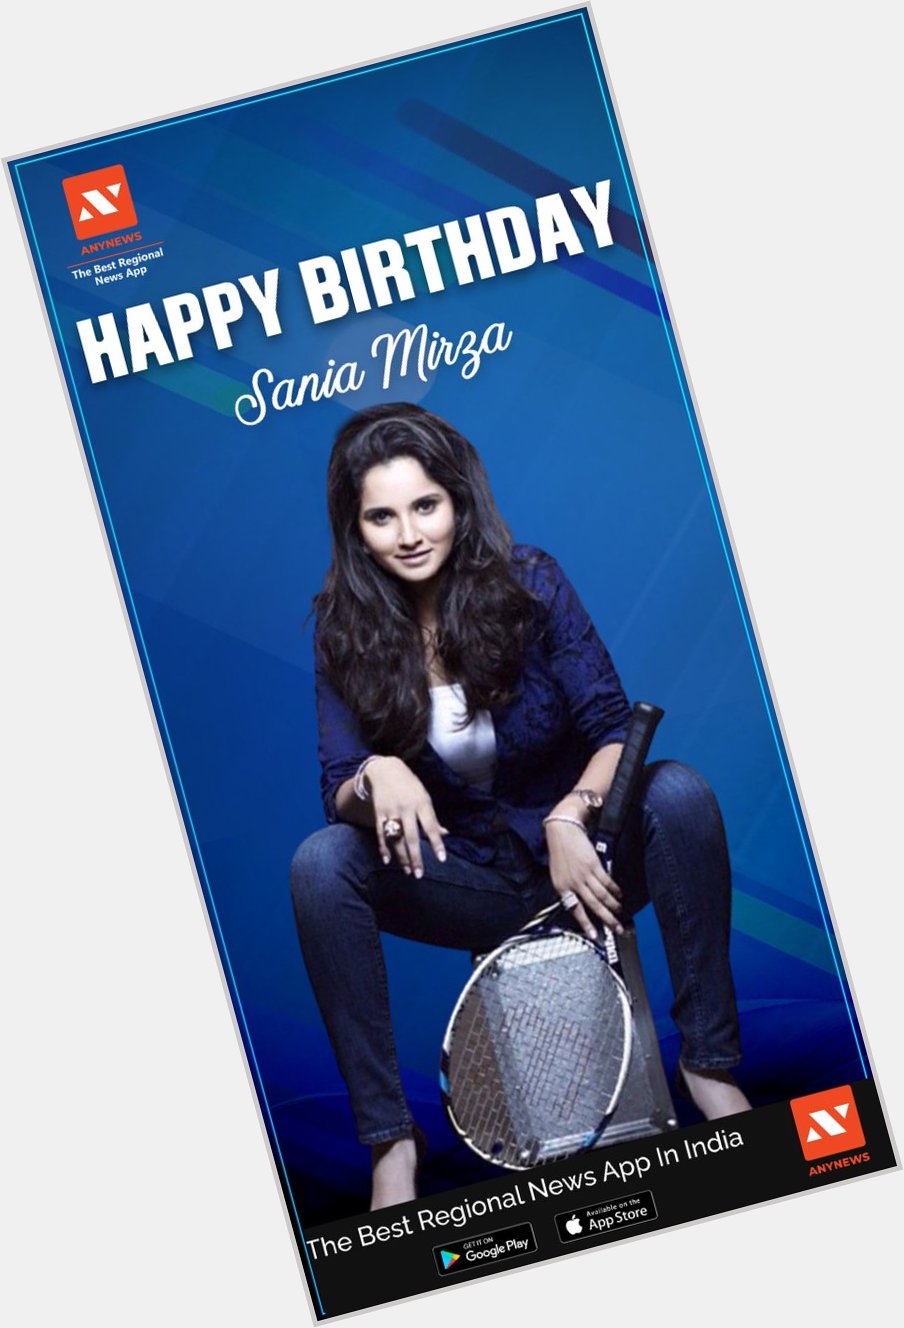 AnyNews wishes Sania Mirza Happy Birthday.    